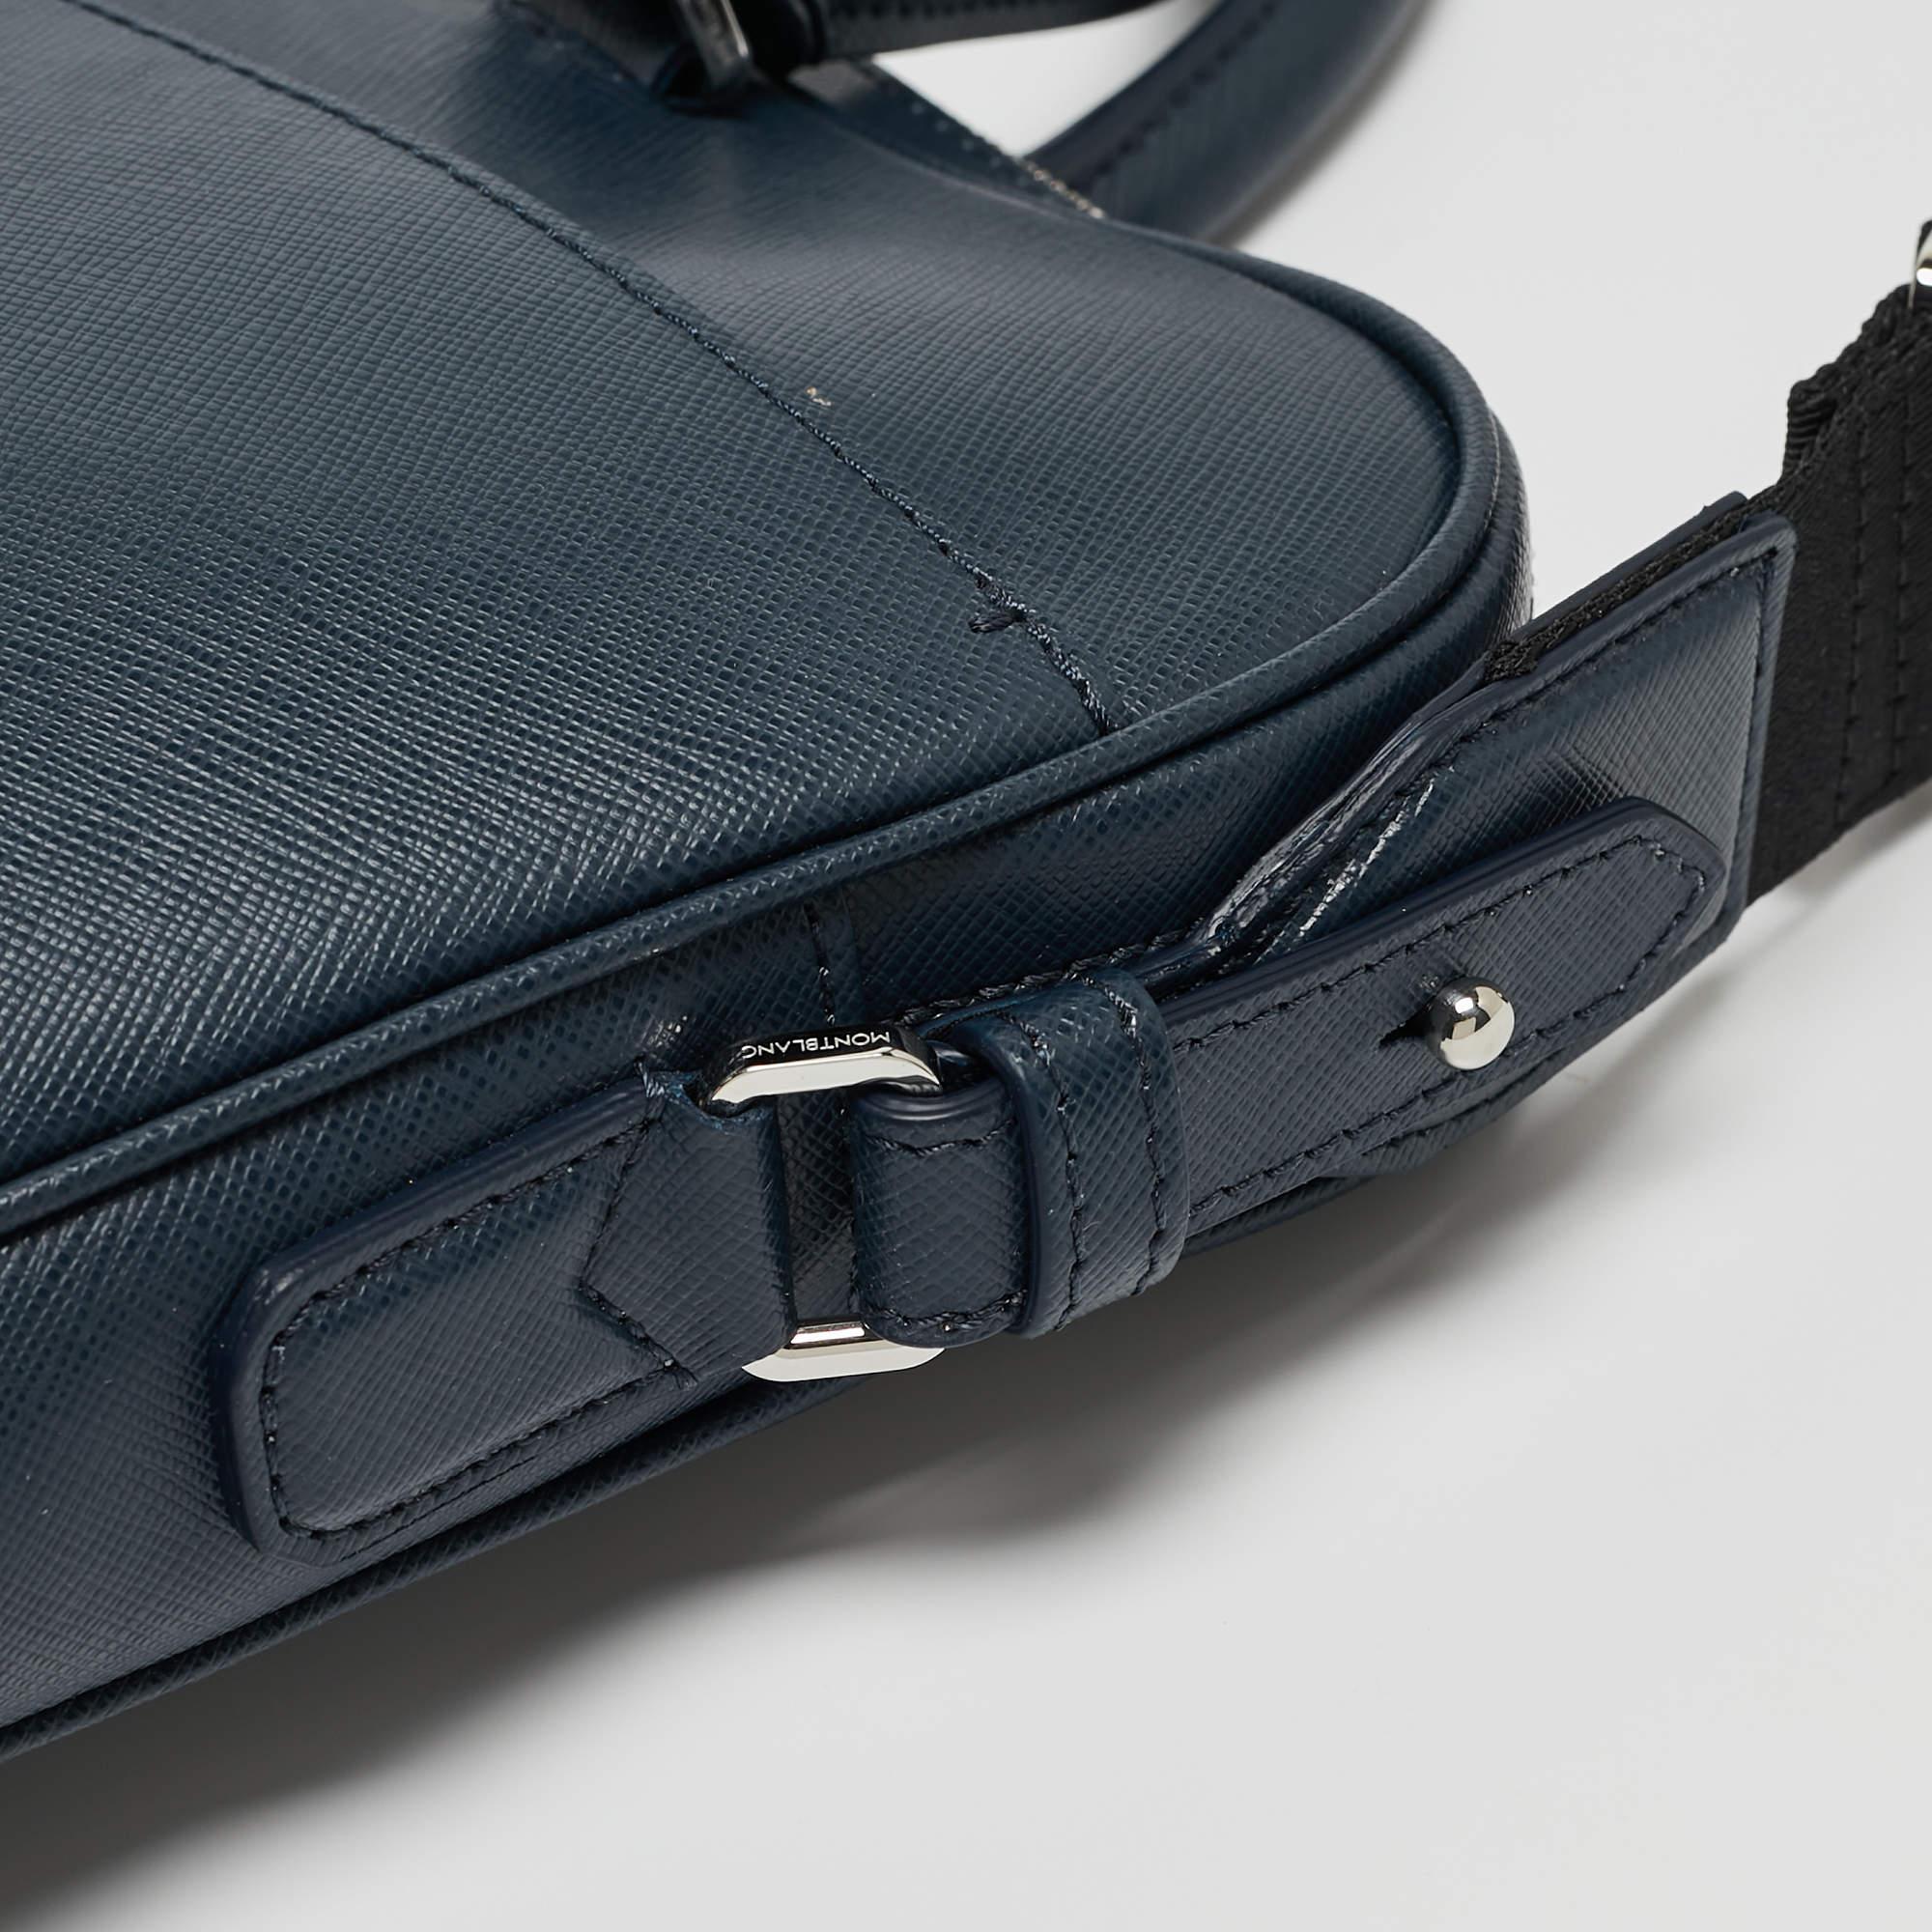 Montblanc Navy Blue Leather Sartorial Ultra Slim Document Case Bag 6